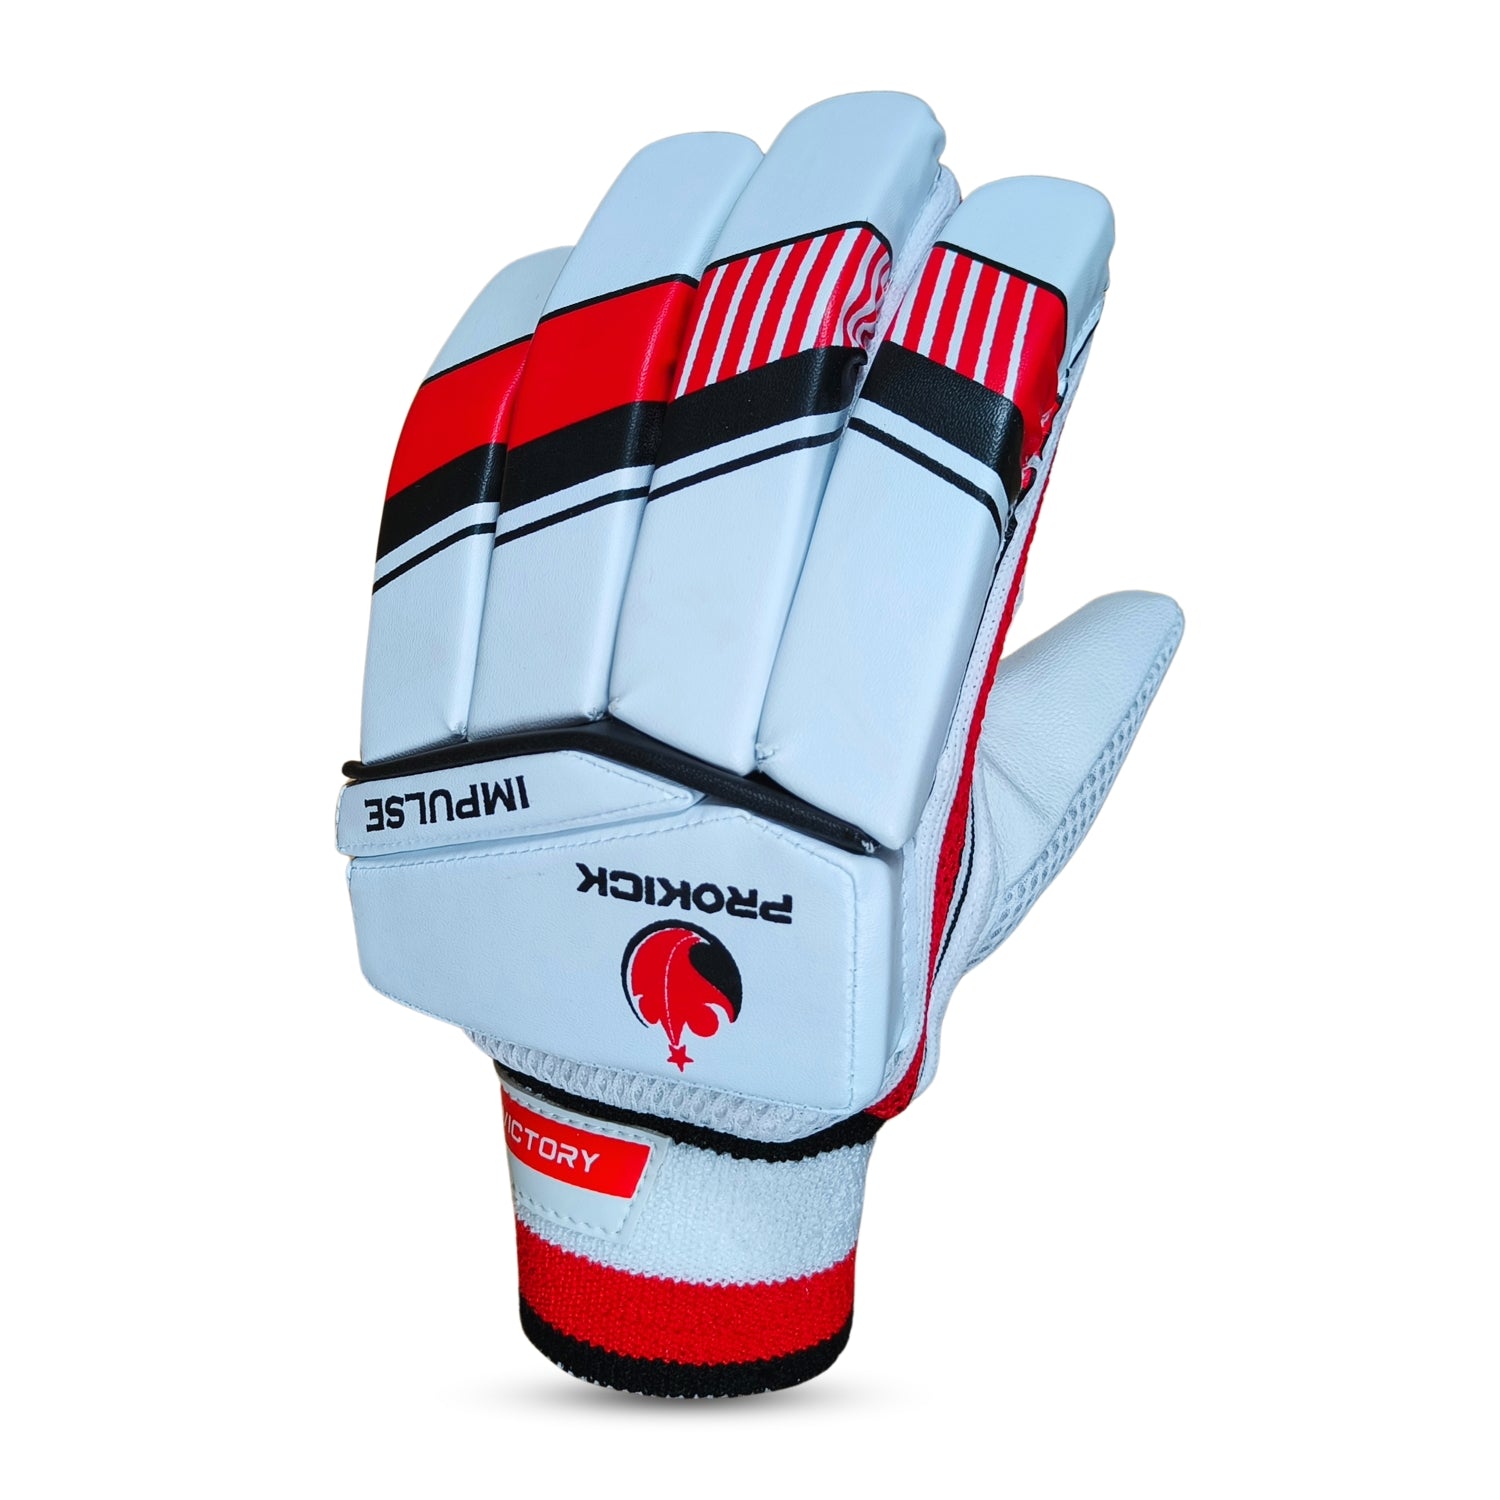 Prokick Impulse RH Cricket Batting Gloves - Best Price online Prokicksports.com